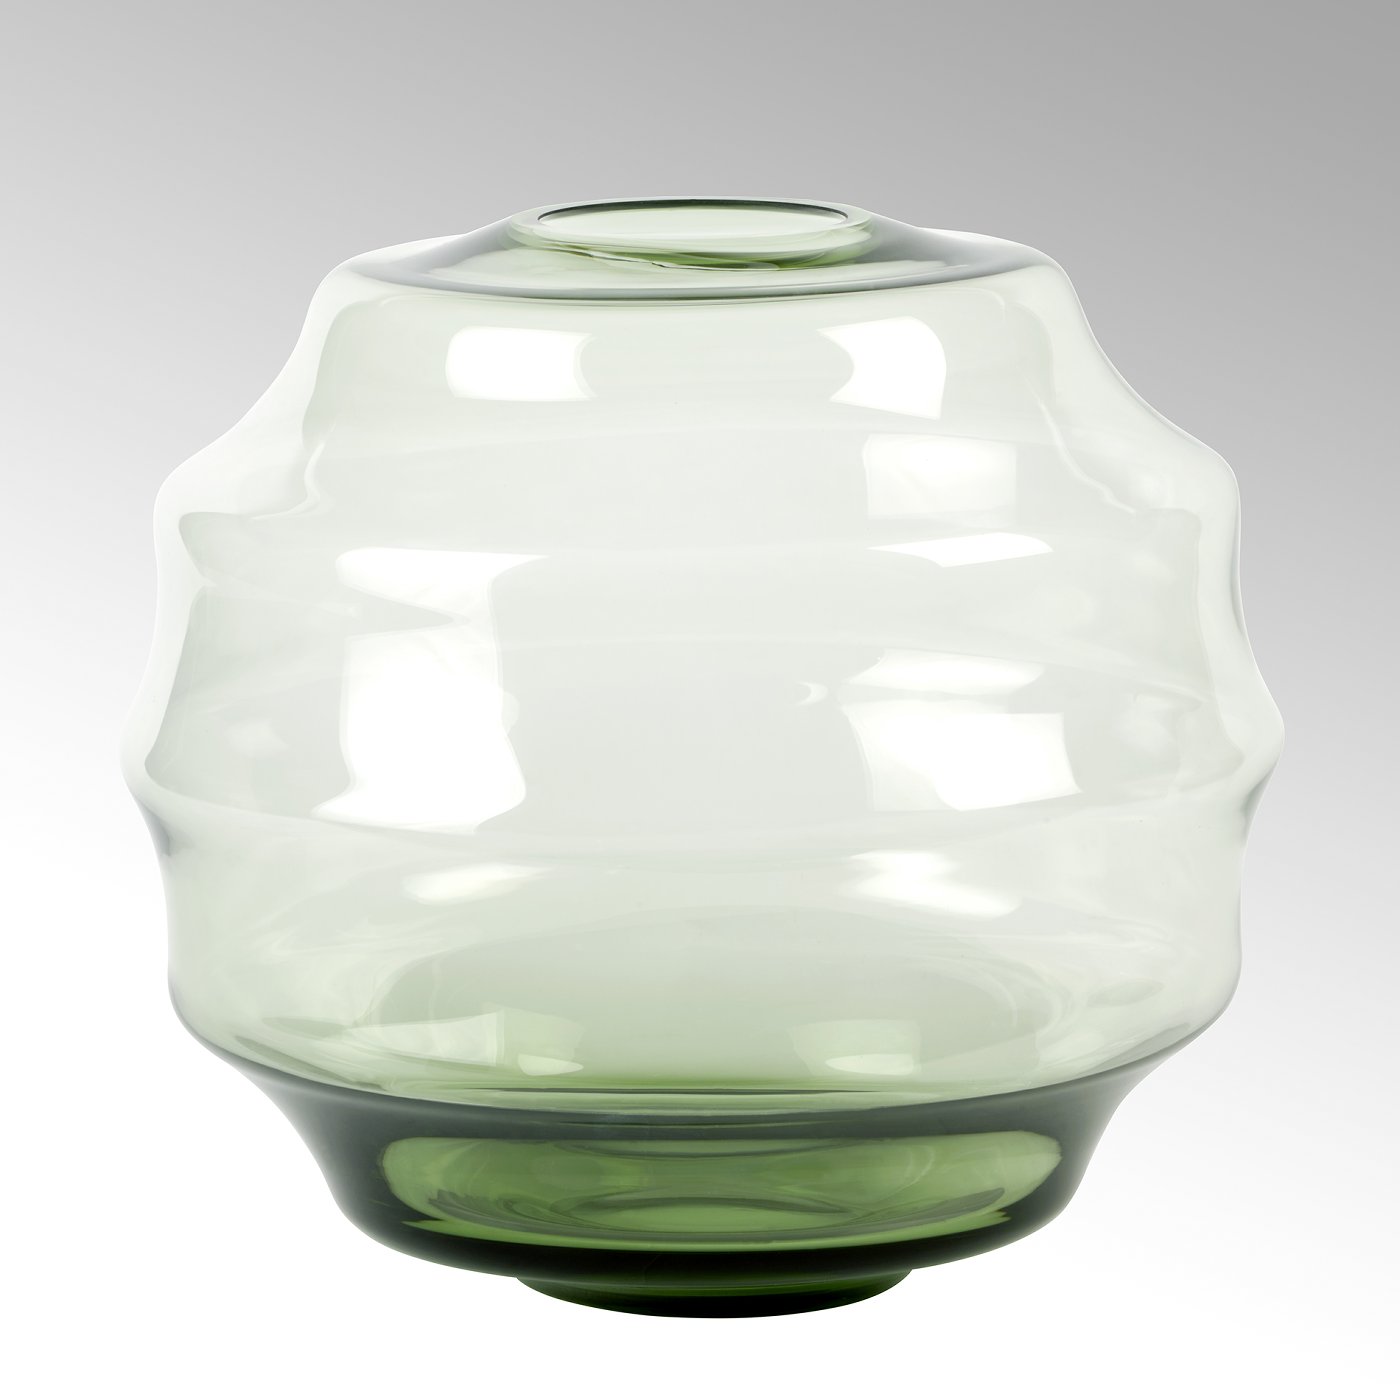 Kokon glass vase